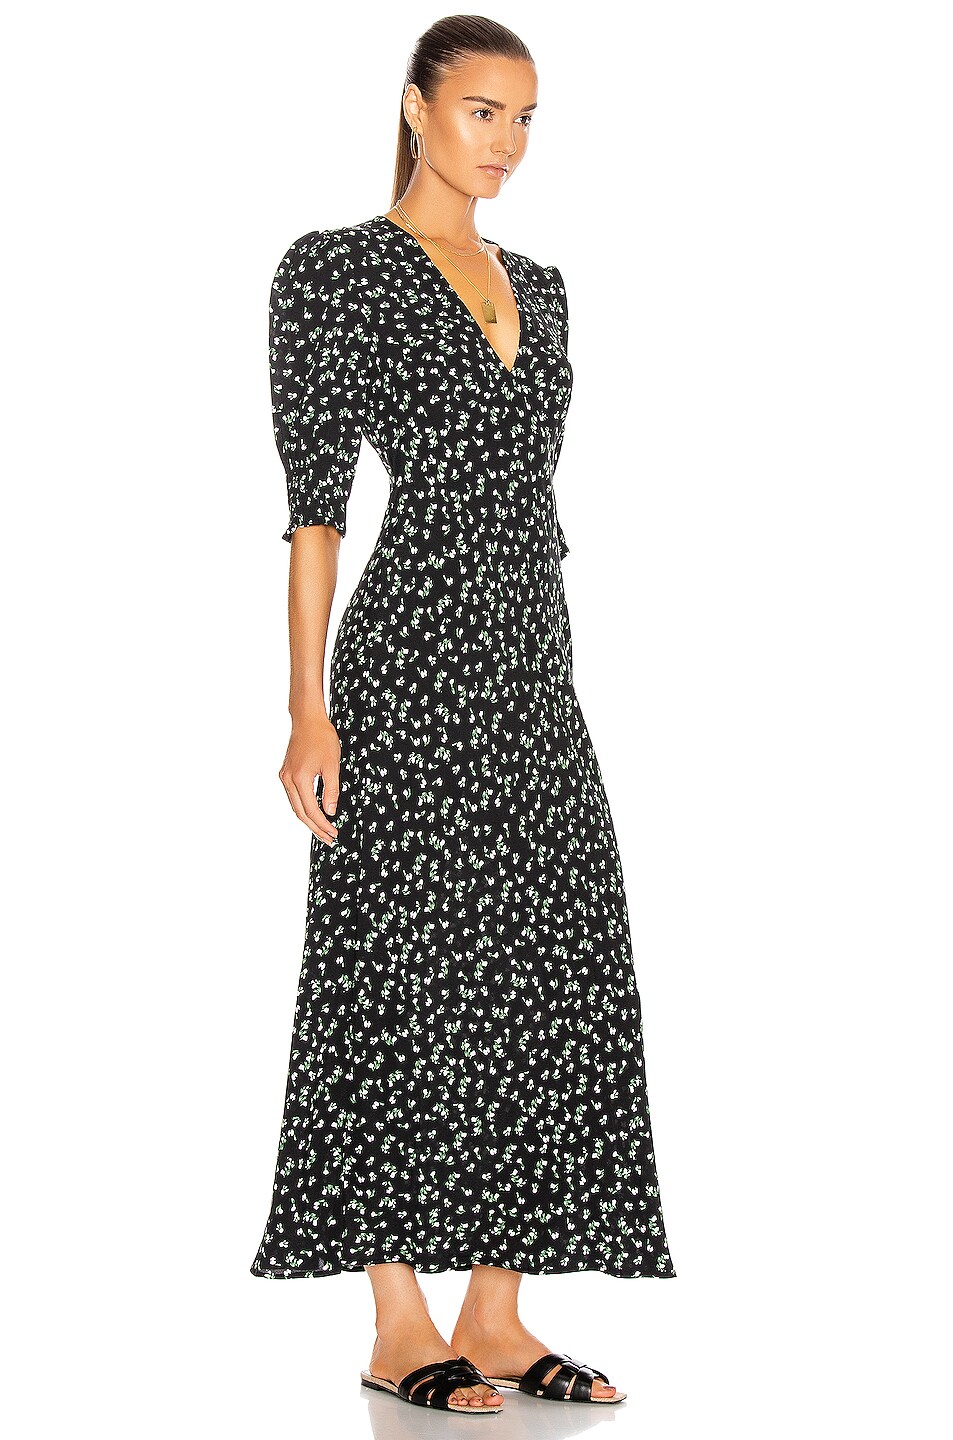 RIXO Zadie Dress in Black & Cream Ditsy Floral | FWRD